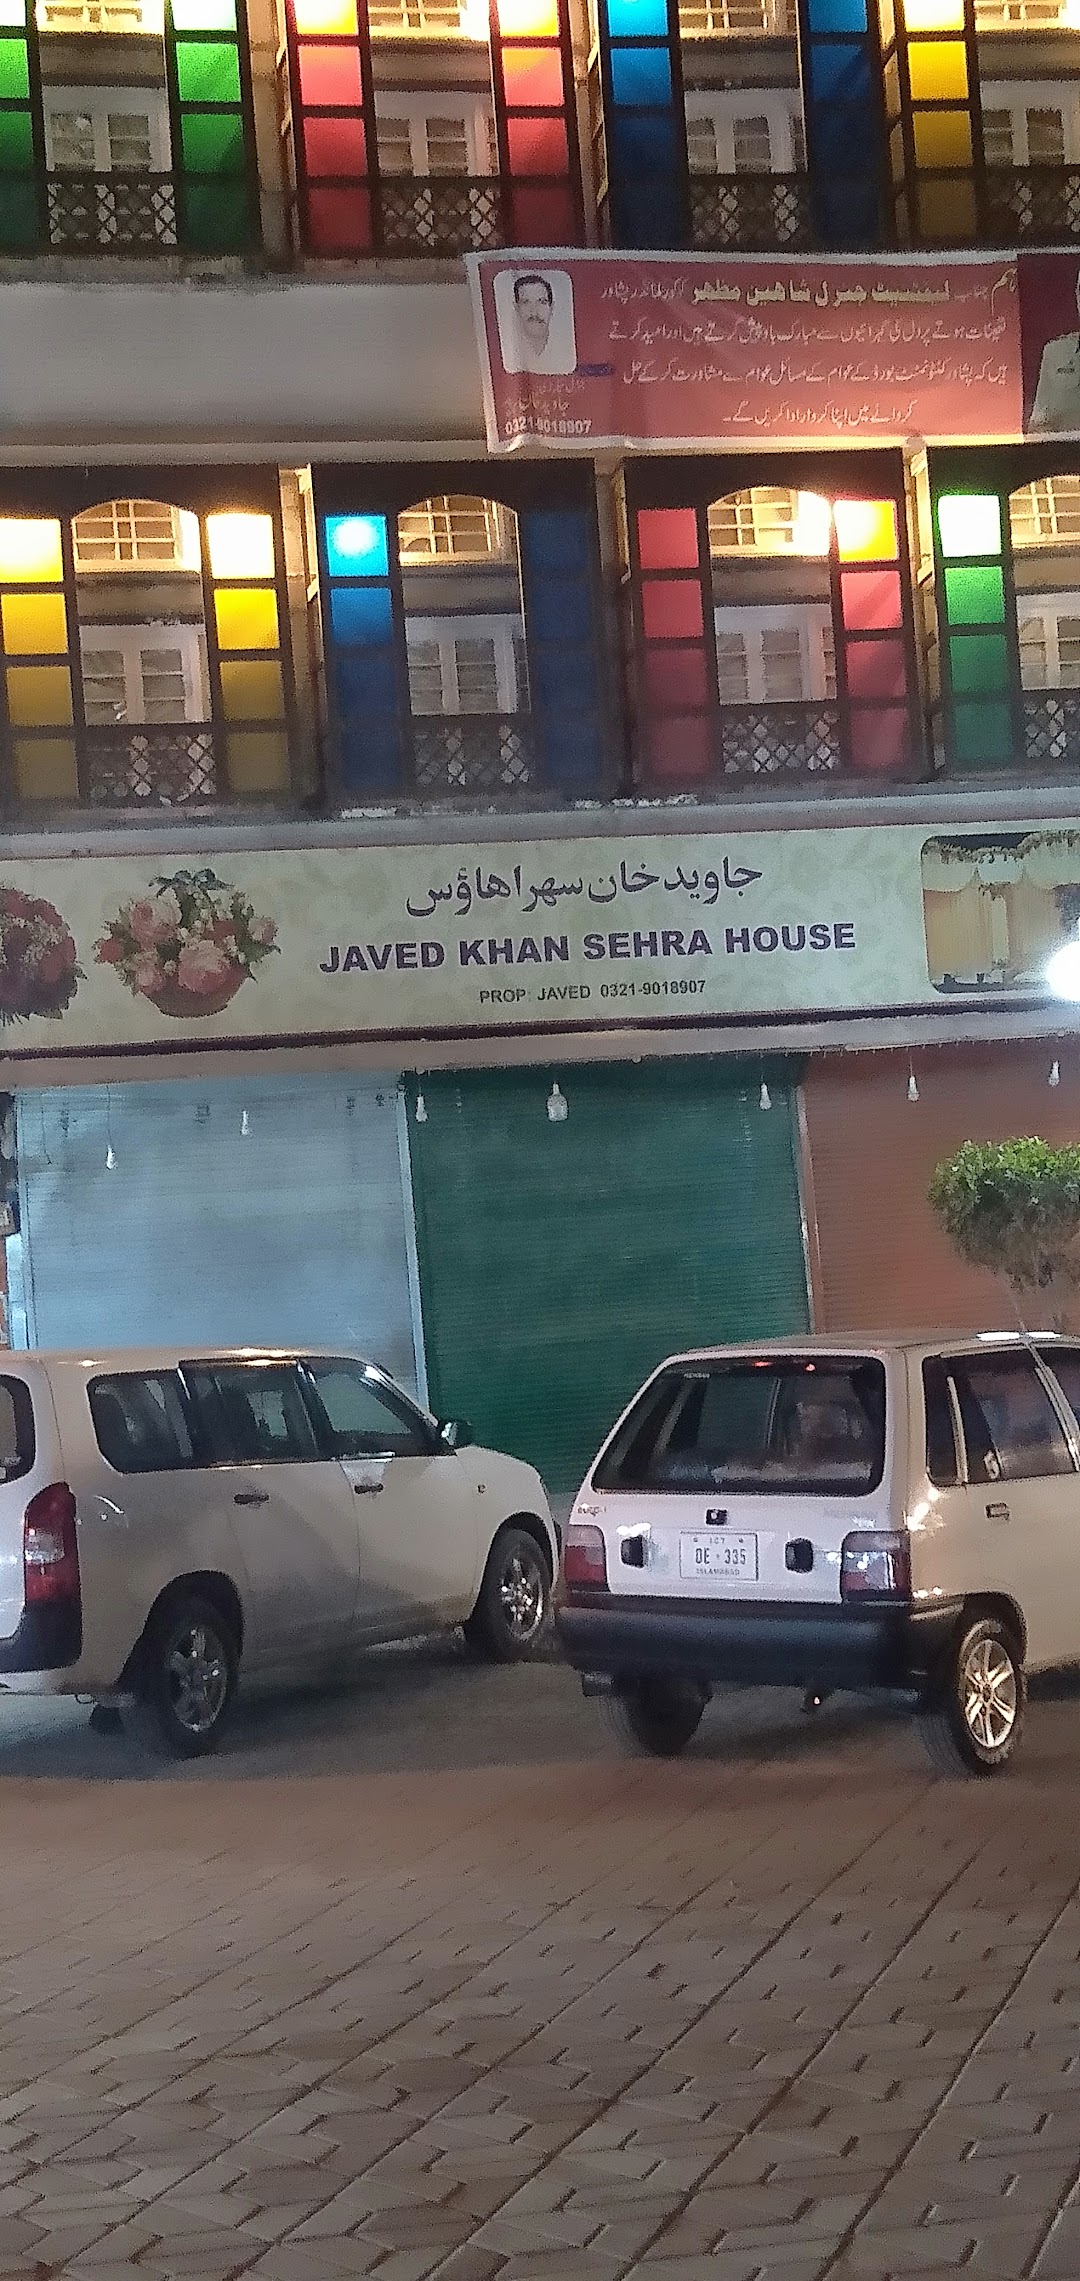 Javed khan sehra house